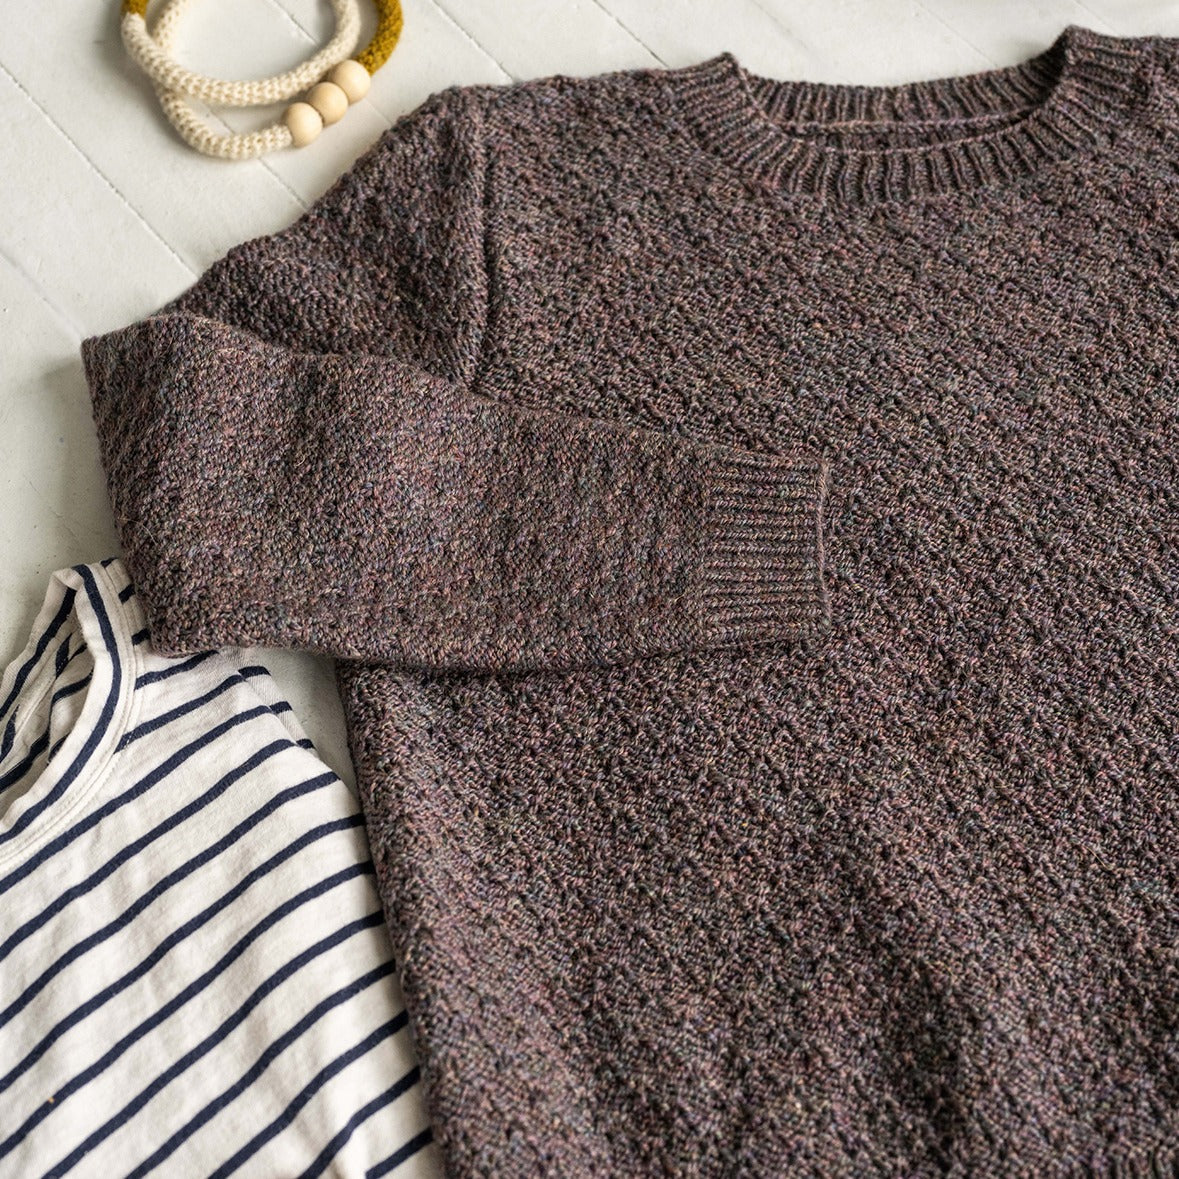 Easy Oversized Sweater Knitting Pattern